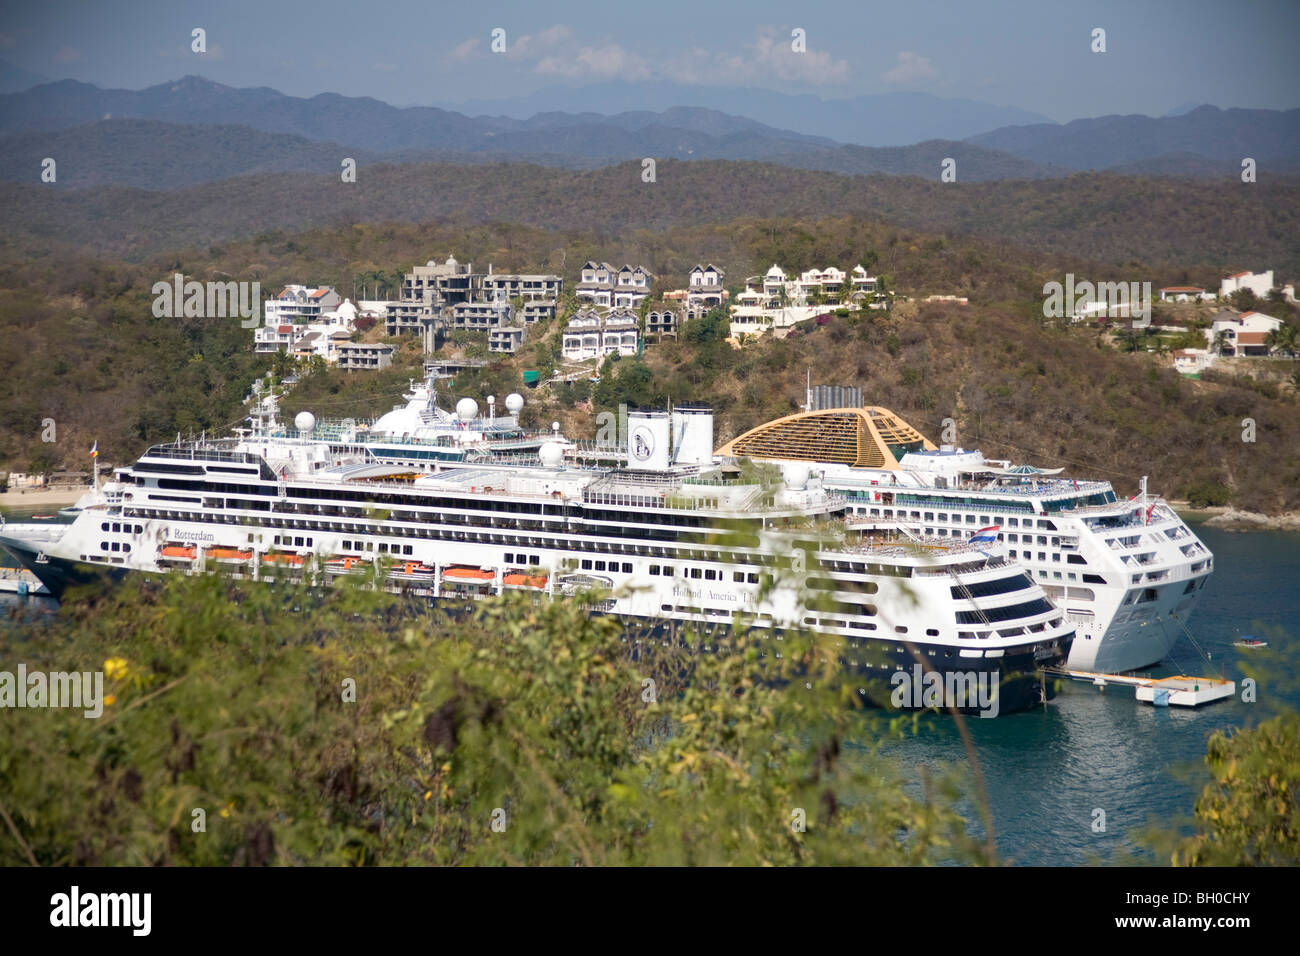 Cruise ships moored in Huatulco bay, Mexico. Stock Photo